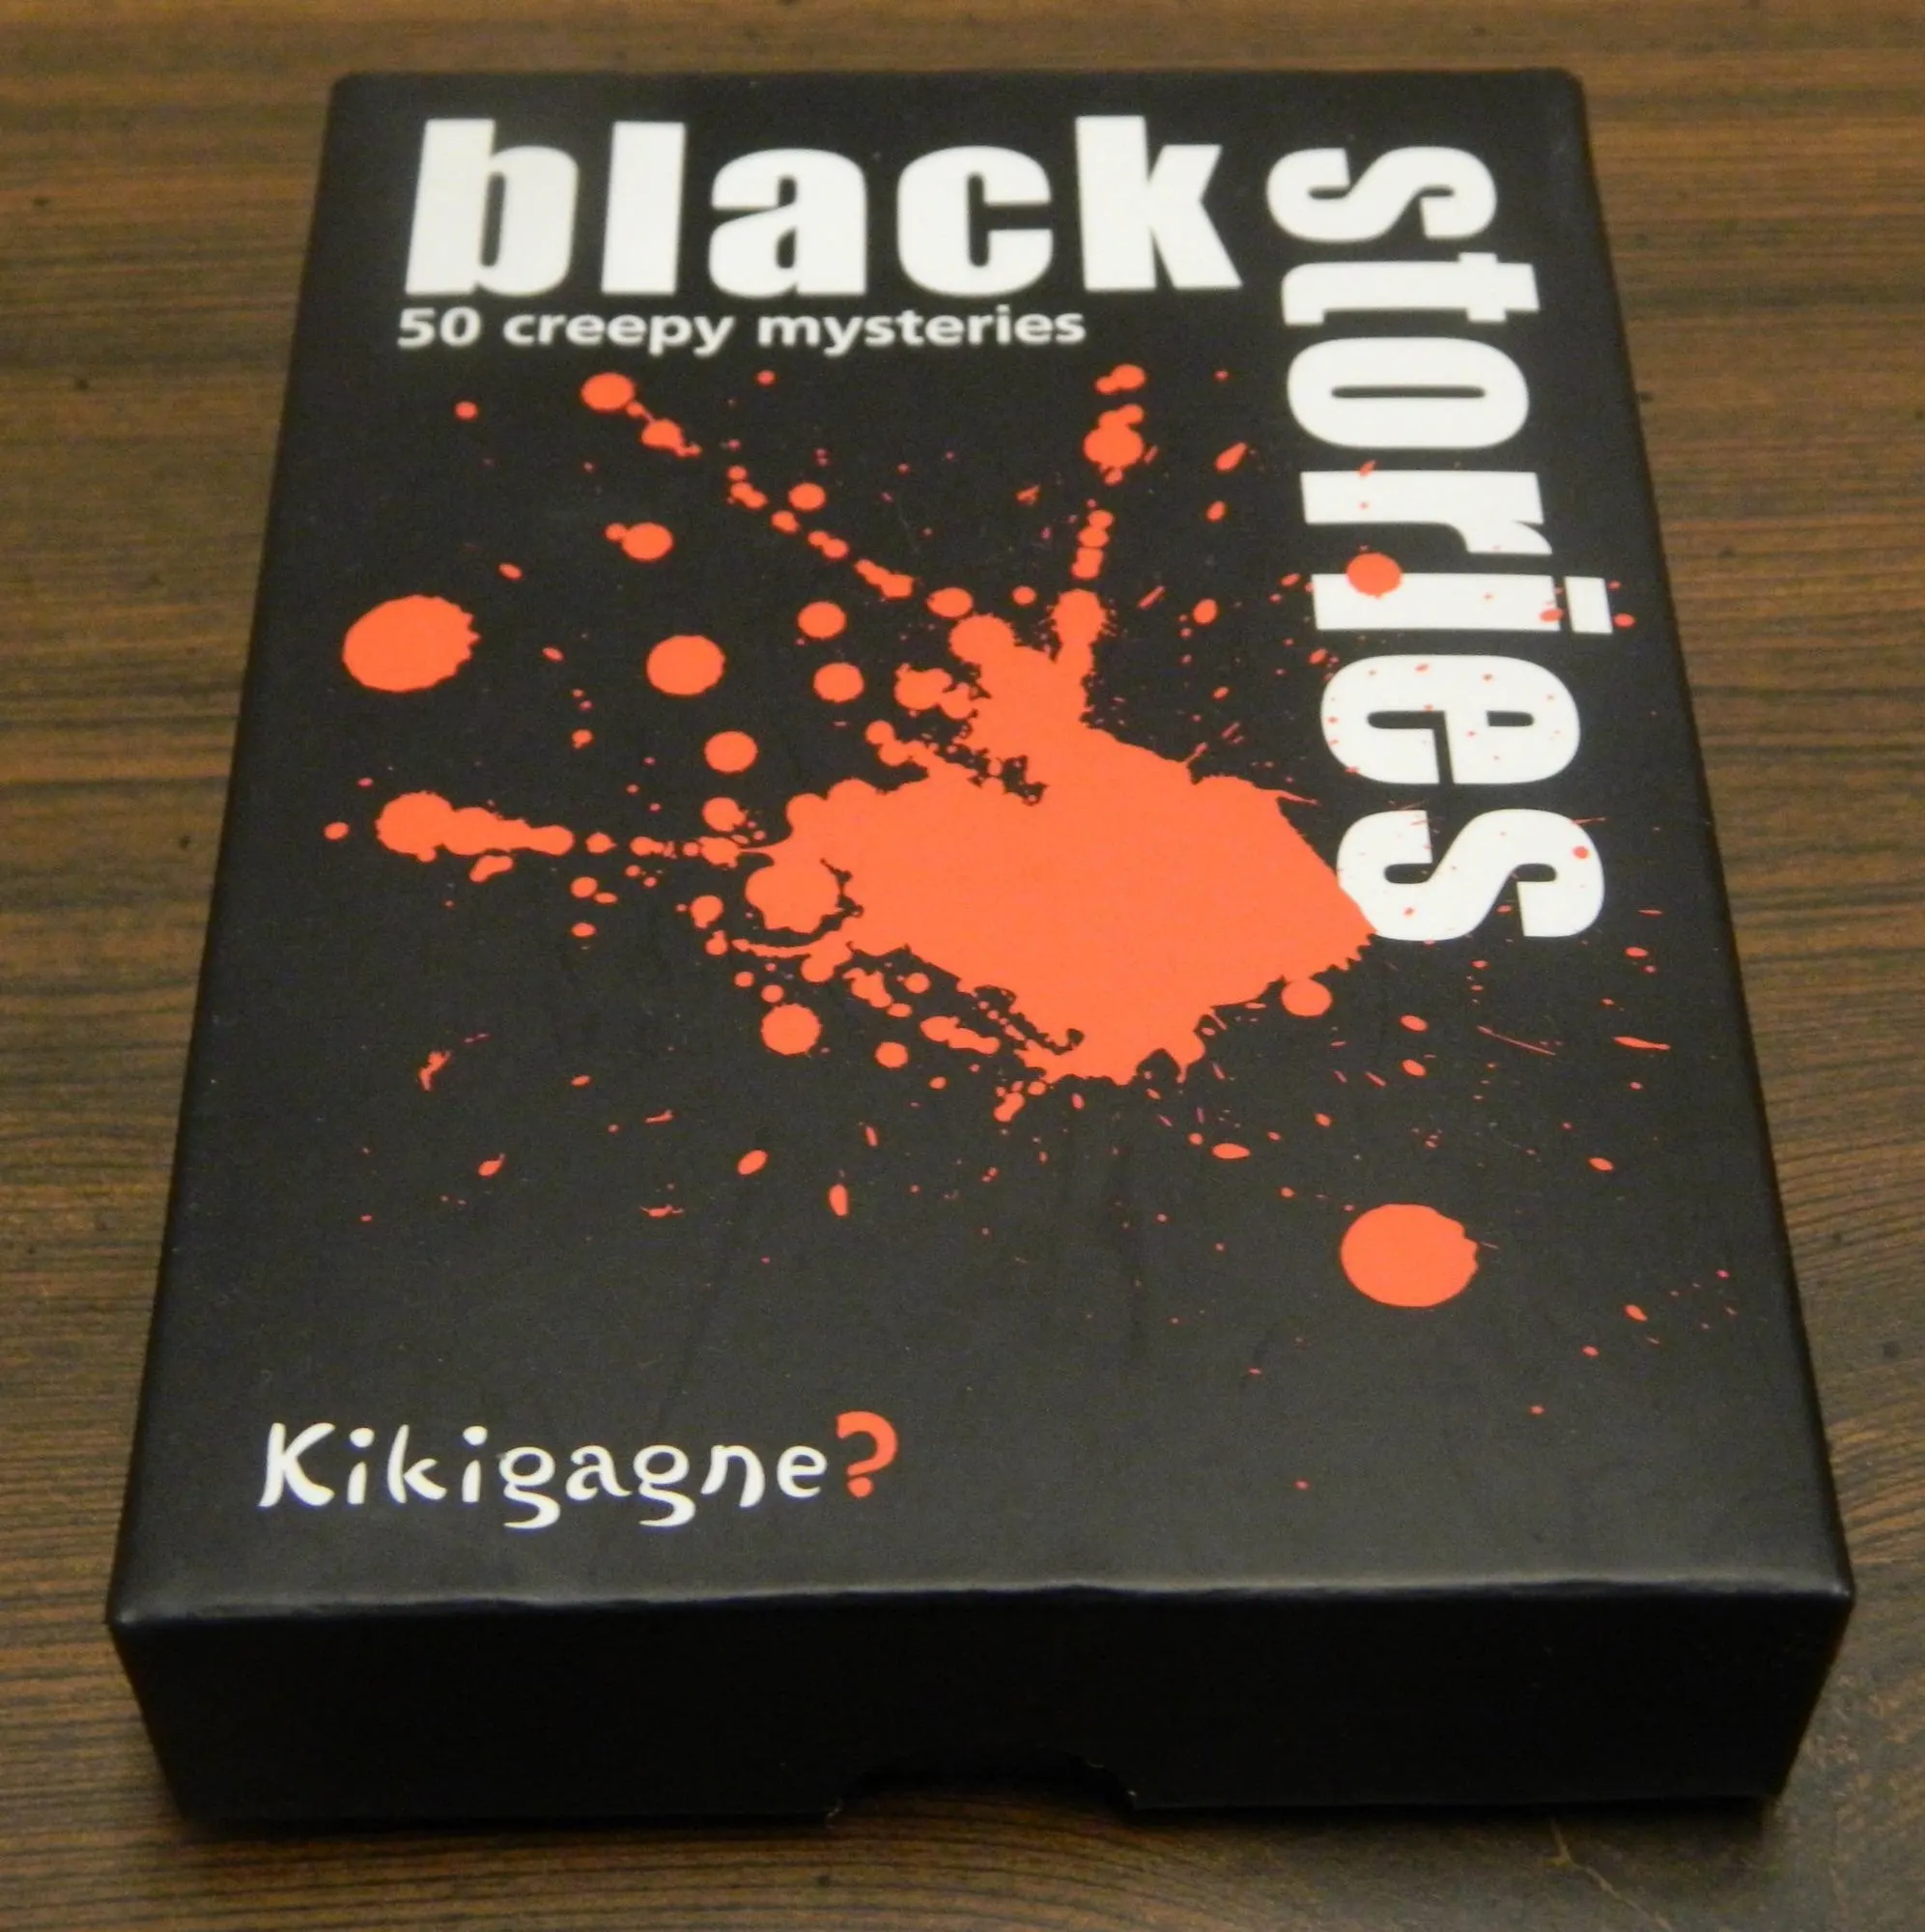 Box for Black Stories